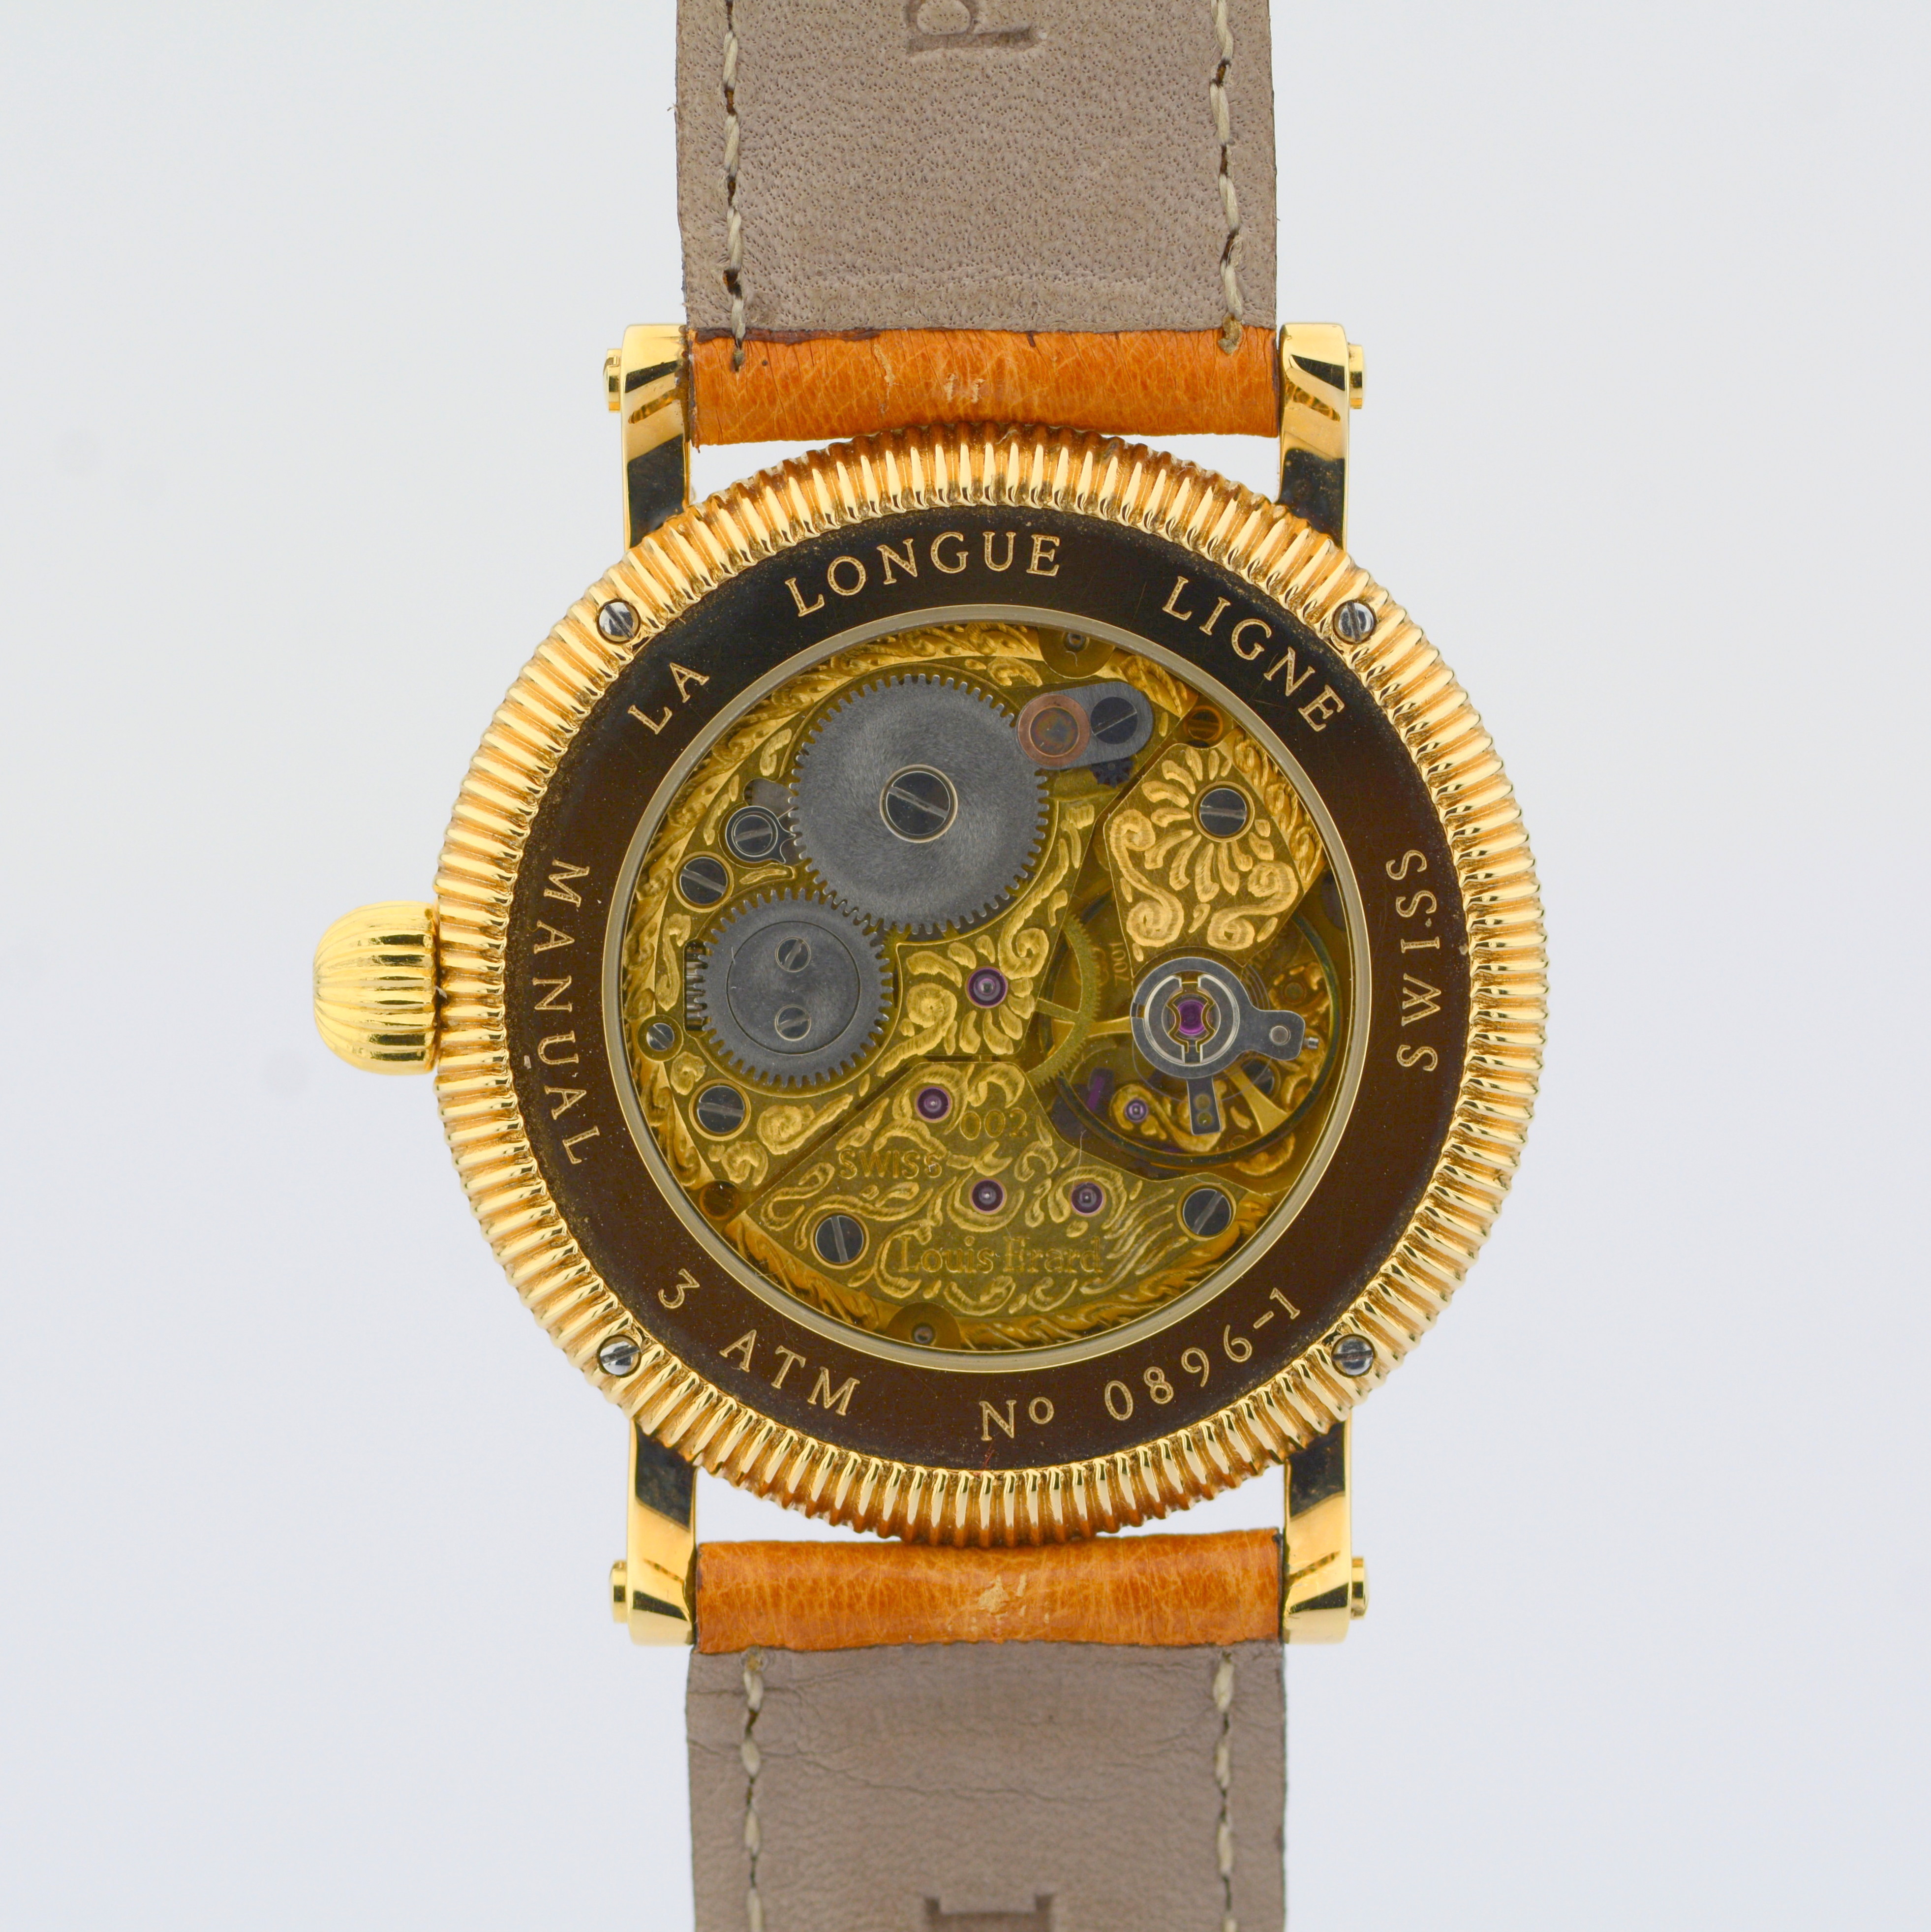 Louis Erard / Manual La longue Ligne (Hand Made)(New) - Unisex Steel Wrist Watch - Image 4 of 9